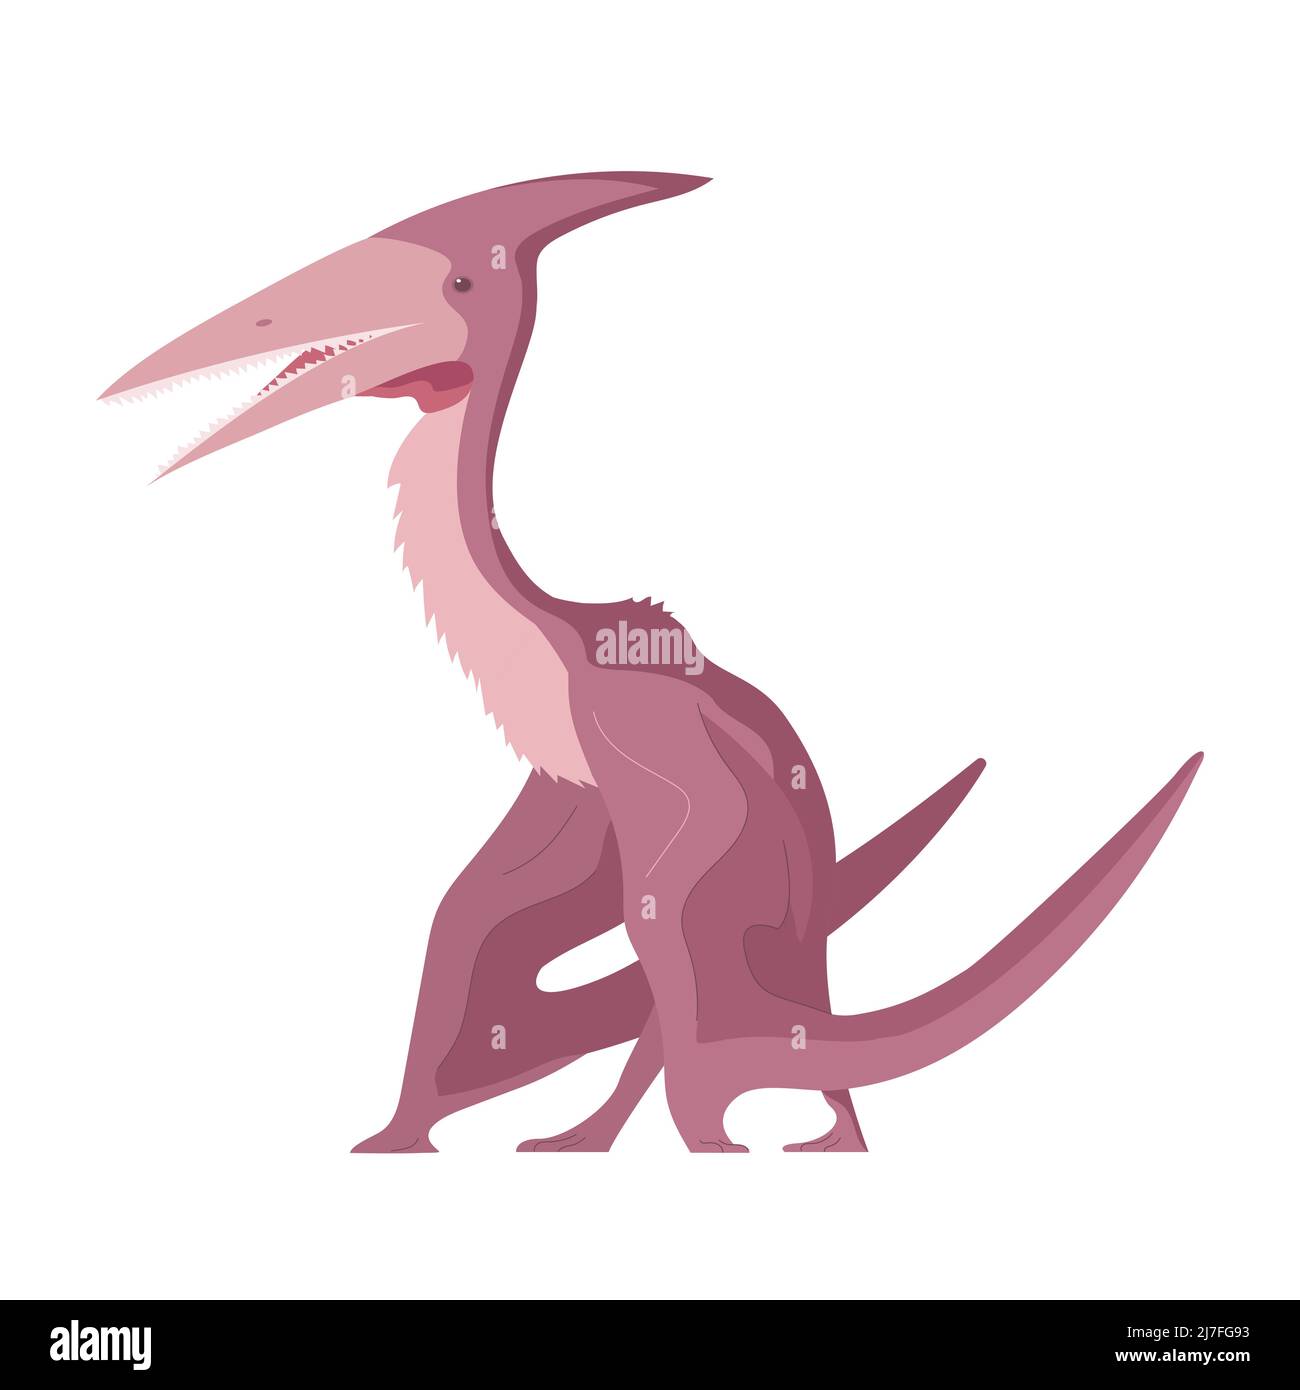 Pterosaur infographic  Prehistoric animals, Prehistoric creatures